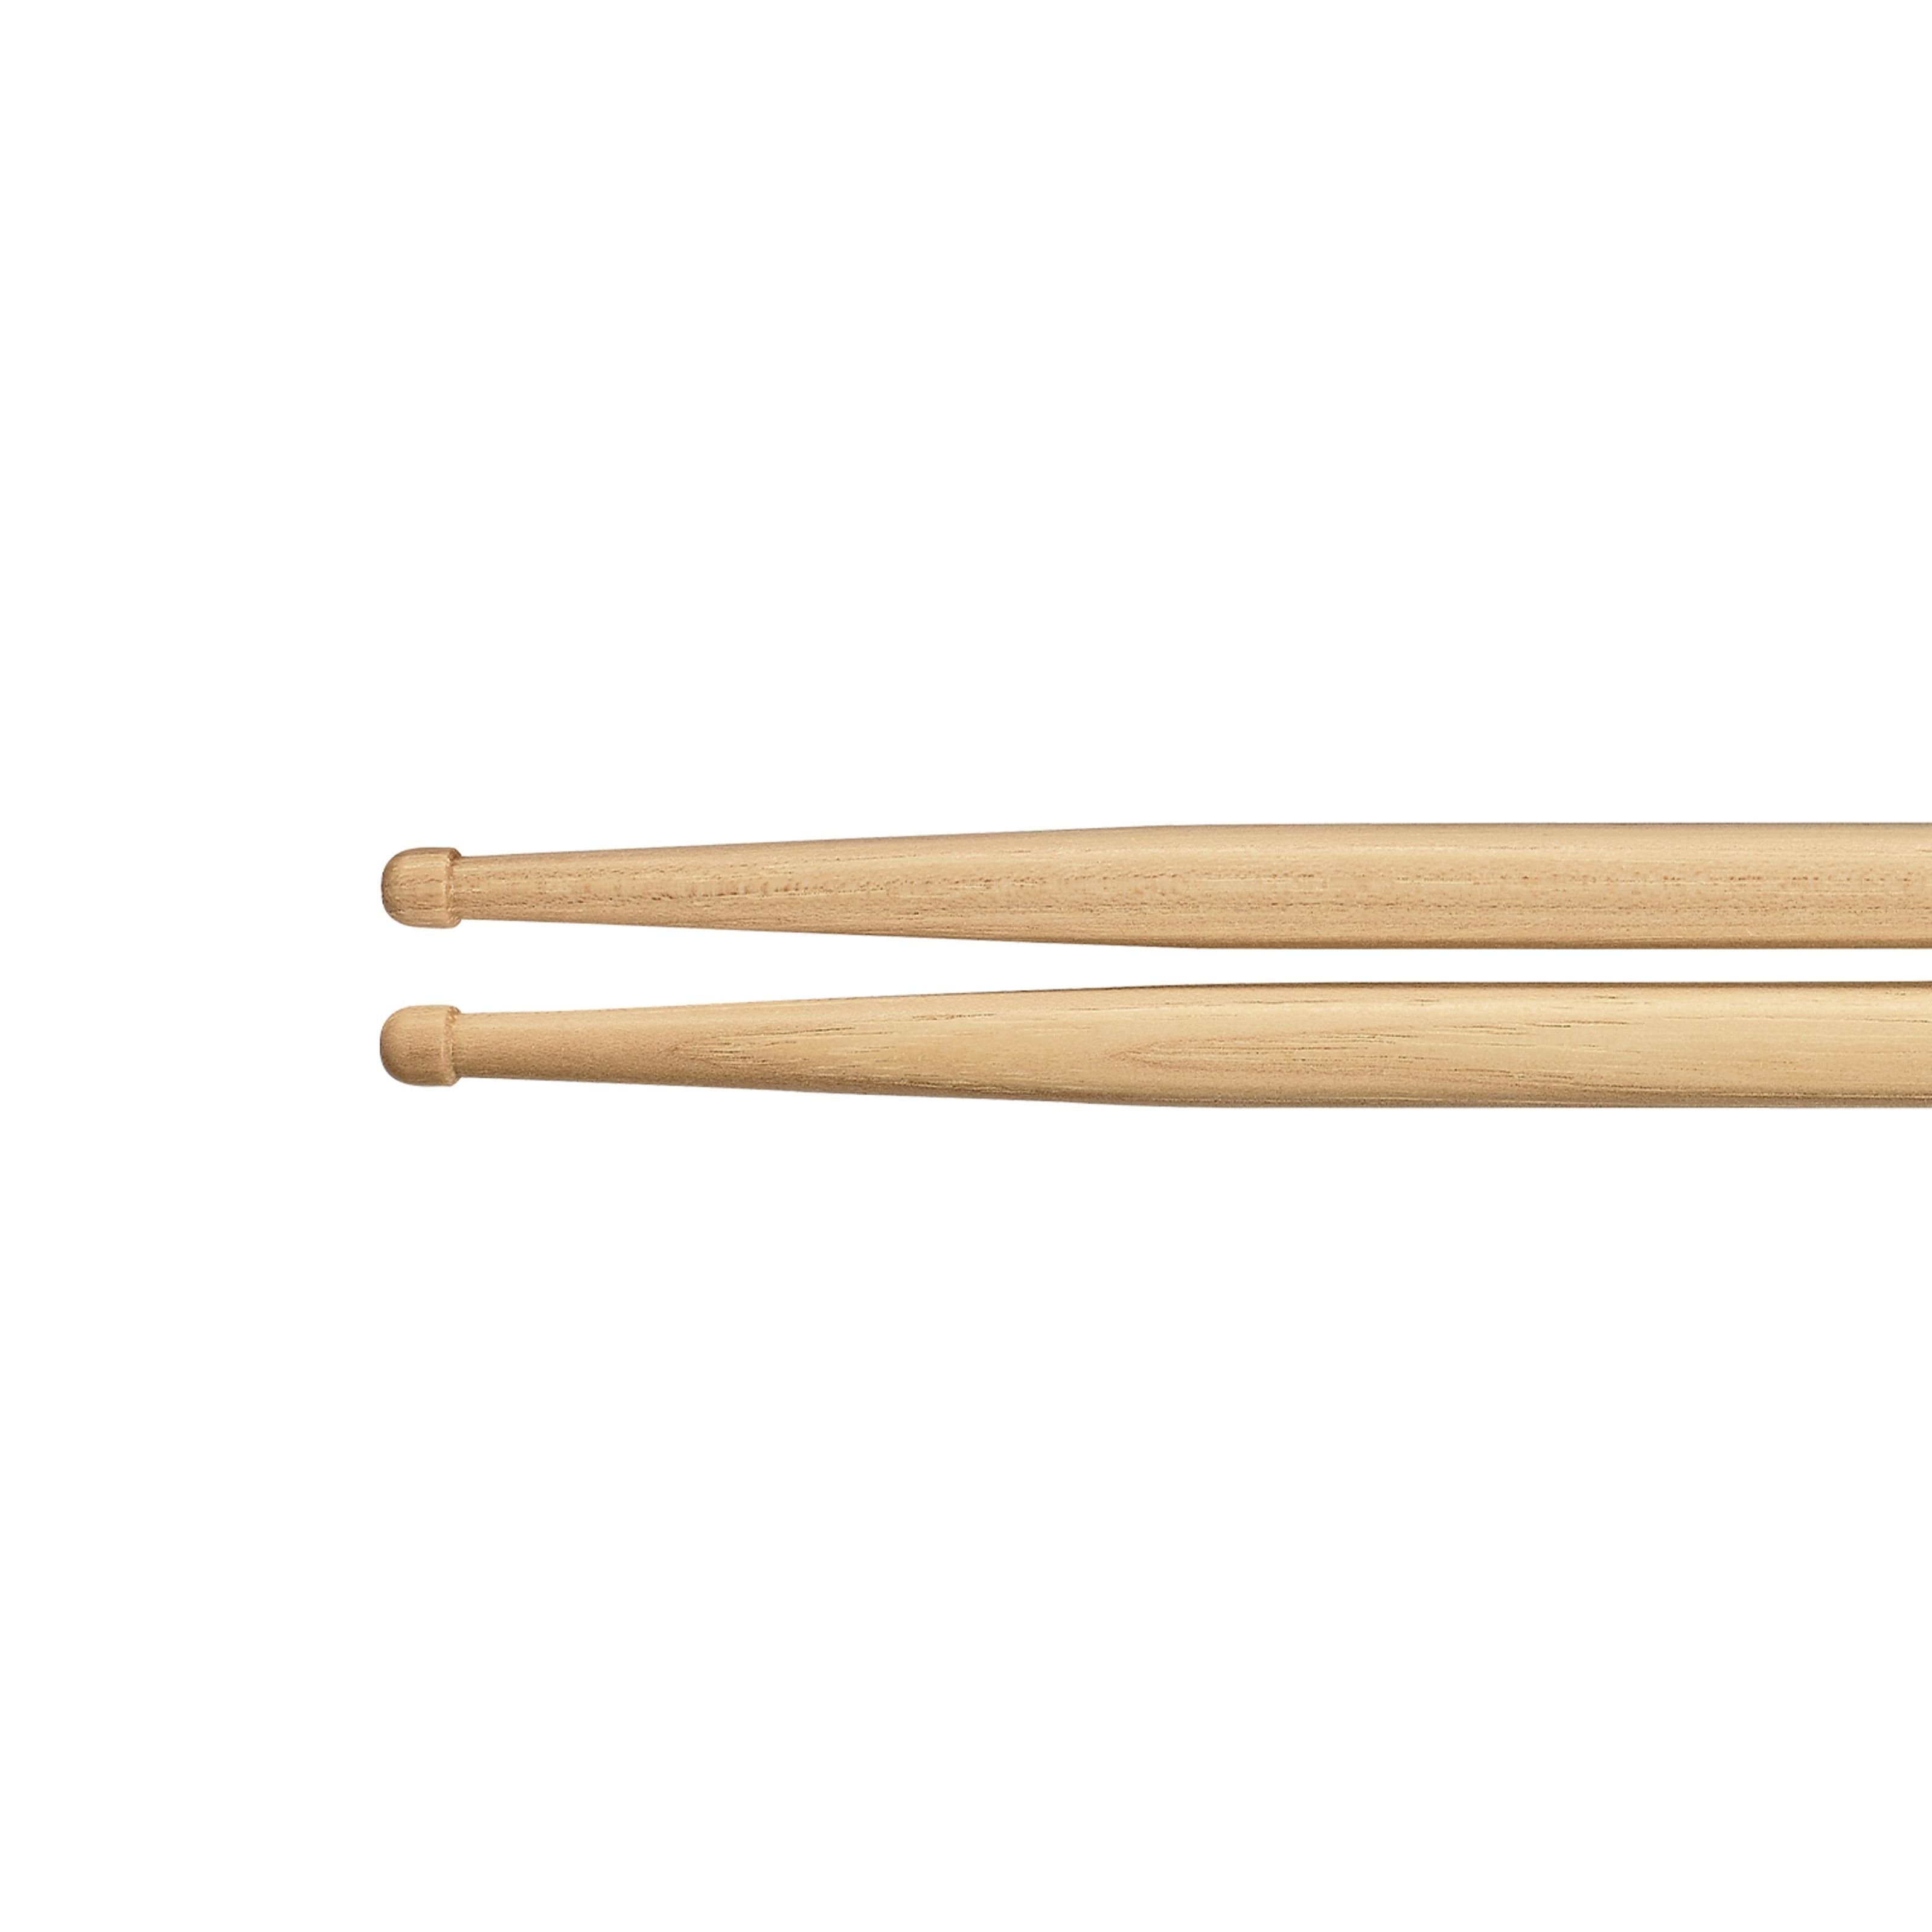 Spielzeug-Musikinstrument, SB131 American HD4 Hickory Meinl Sticks Drumsticks Percussion - Concert